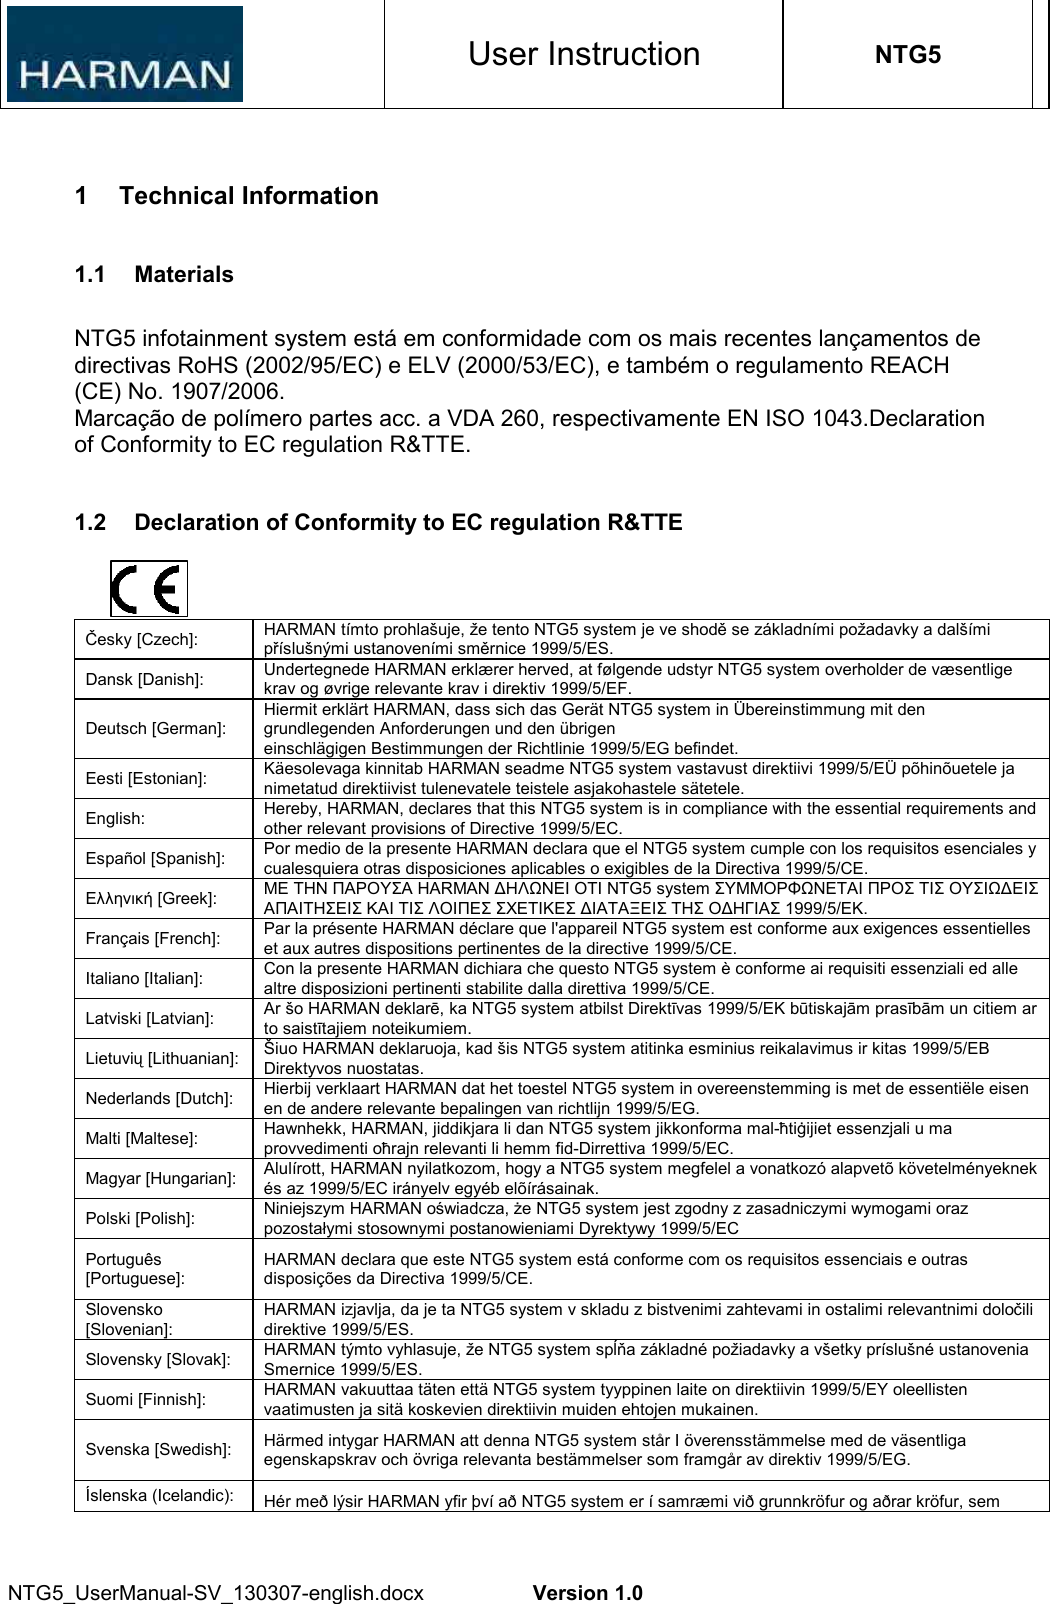 User Instruction NTG5 NTG5_UserManual-SV_130307-english.docx  Version 1.0 1  Technical Information 1.1  Materials NTG5 infotainment system está em conformidade com os mais recentes lançamentos de directivas RoHS (2002/95/EC) e ELV (2000/53/EC), e também o regulamento REACH (CE) No. 1907/2006. Marcação de polímero partes acc. a VDA 260, respectivamente EN ISO 1043.Declaration of Conformity to EC regulation R&amp;TTE. 1.2  Declaration of Conformity to EC regulation R&amp;TTE Česky [Czech]:  HARMAN tímto prohlašuje, že tento NTG5 system je ve shodě se základními požadavky a dalšími příslušnými ustanoveními směrnice 1999/5/ES. Dansk [Danish]:  Undertegnede HARMAN erklærer herved, at følgende udstyr NTG5 system overholder de væsentlige krav og øvrige relevante krav i direktiv 1999/5/EF. Deutsch [German]: Hiermit erklärt HARMAN, dass sich das Gerät NTG5 system in Übereinstimmung mit den grundlegenden Anforderungen und den übrigen einschlägigen Bestimmungen der Richtlinie 1999/5/EG befindet. Eesti [Estonian]:  Käesolevaga kinnitab HARMAN seadme NTG5 system vastavust direktiivi 1999/5/EÜ põhinõuetele ja nimetatud direktiivist tulenevatele teistele asjakohastele sätetele. English:  Hereby, HARMAN, declares that this NTG5 system is in compliance with the essential requirements and other relevant provisions of Directive 1999/5/EC. Español [Spanish]:  Por medio de la presente HARMAN declara que el NTG5 system cumple con los requisitos esenciales y cualesquiera otras disposiciones aplicables o exigibles de la Directiva 1999/5/CE. Ελληνική [Greek]:  ΜΕ ΤΗΝ ΠΑΡΟΥΣΑ HARMAN ∆ΗΛΩΝΕΙ ΟΤΙ NTG5 system ΣΥΜΜΟΡΦΩΝΕΤΑΙ ΠΡΟΣ ΤΙΣ ΟΥΣΙΩ∆ΕΙΣ ΑΠΑΙΤΗΣΕΙΣ ΚΑΙ ΤΙΣ ΛΟΙΠΕΣ ΣΧΕΤΙΚΕΣ ∆ΙΑΤΑΞΕΙΣ ΤΗΣ Ο∆ΗΓΙΑΣ 1999/5/ΕΚ. Français [French]:  Par la présente HARMAN déclare que l&apos;appareil NTG5 system est conforme aux exigences essentielles et aux autres dispositions pertinentes de la directive 1999/5/CE. Italiano [Italian]:  Con la presente HARMAN dichiara che questo NTG5 system è conforme ai requisiti essenziali ed alle altre disposizioni pertinenti stabilite dalla direttiva 1999/5/CE. Latviski [Latvian]:  Ar šo HARMAN deklarē, ka NTG5 system atbilst Direktīvas 1999/5/EK būtiskajām prasībām un citiem ar to saistītajiem noteikumiem. Lietuvių [Lithuanian]:  Šiuo HARMAN deklaruoja, kad šis NTG5 system atitinka esminius reikalavimus ir kitas 1999/5/EB Direktyvos nuostatas. Nederlands [Dutch]:  Hierbij verklaart HARMAN dat het toestel NTG5 system in overeenstemming is met de essentiële eisen en de andere relevante bepalingen van richtlijn 1999/5/EG. Malti [Maltese]:  Hawnhekk, HARMAN, jiddikjara li dan NTG5 system jikkonforma mal-ħtiġijiet essenzjali u ma provvedimenti oħrajn relevanti li hemm fid-Dirrettiva 1999/5/EC. Magyar [Hungarian]:  Alulírott, HARMAN nyilatkozom, hogy a NTG5 system megfelel a vonatkozó alapvetõ követelményeknek és az 1999/5/EC irányelv egyéb elõírásainak. Polski [Polish]:  Niniejszym HARMAN oświadcza, że NTG5 system jest zgodny z zasadniczymi wymogami oraz pozostałymi stosownymi postanowieniami Dyrektywy 1999/5/EC Português [Portuguese]: HARMAN declara que este NTG5 system está conforme com os requisitos essenciais e outras disposições da Directiva 1999/5/CE. Slovensko [Slovenian]: HARMAN izjavlja, da je ta NTG5 system v skladu z bistvenimi zahtevami in ostalimi relevantnimi določili direktive 1999/5/ES. Slovensky [Slovak]:  HARMAN týmto vyhlasuje, že NTG5 system spĺňa základné požiadavky a všetky príslušné ustanovenia Smernice 1999/5/ES. Suomi [Finnish]:  HARMAN vakuuttaa täten että NTG5 system tyyppinen laite on direktiivin 1999/5/EY oleellisten vaatimusten ja sitä koskevien direktiivin muiden ehtojen mukainen. Svenska [Swedish]:  Härmed intygar HARMAN att denna NTG5 system står I överensstämmelse med de väsentliga egenskapskrav och övriga relevanta bestämmelser som framgår av direktiv 1999/5/EG. Íslenska (Icelandic):  Hér með lýsir HARMAN yfir því að NTG5 system er í samræmi við grunnkröfur og aðrar kröfur, sem 